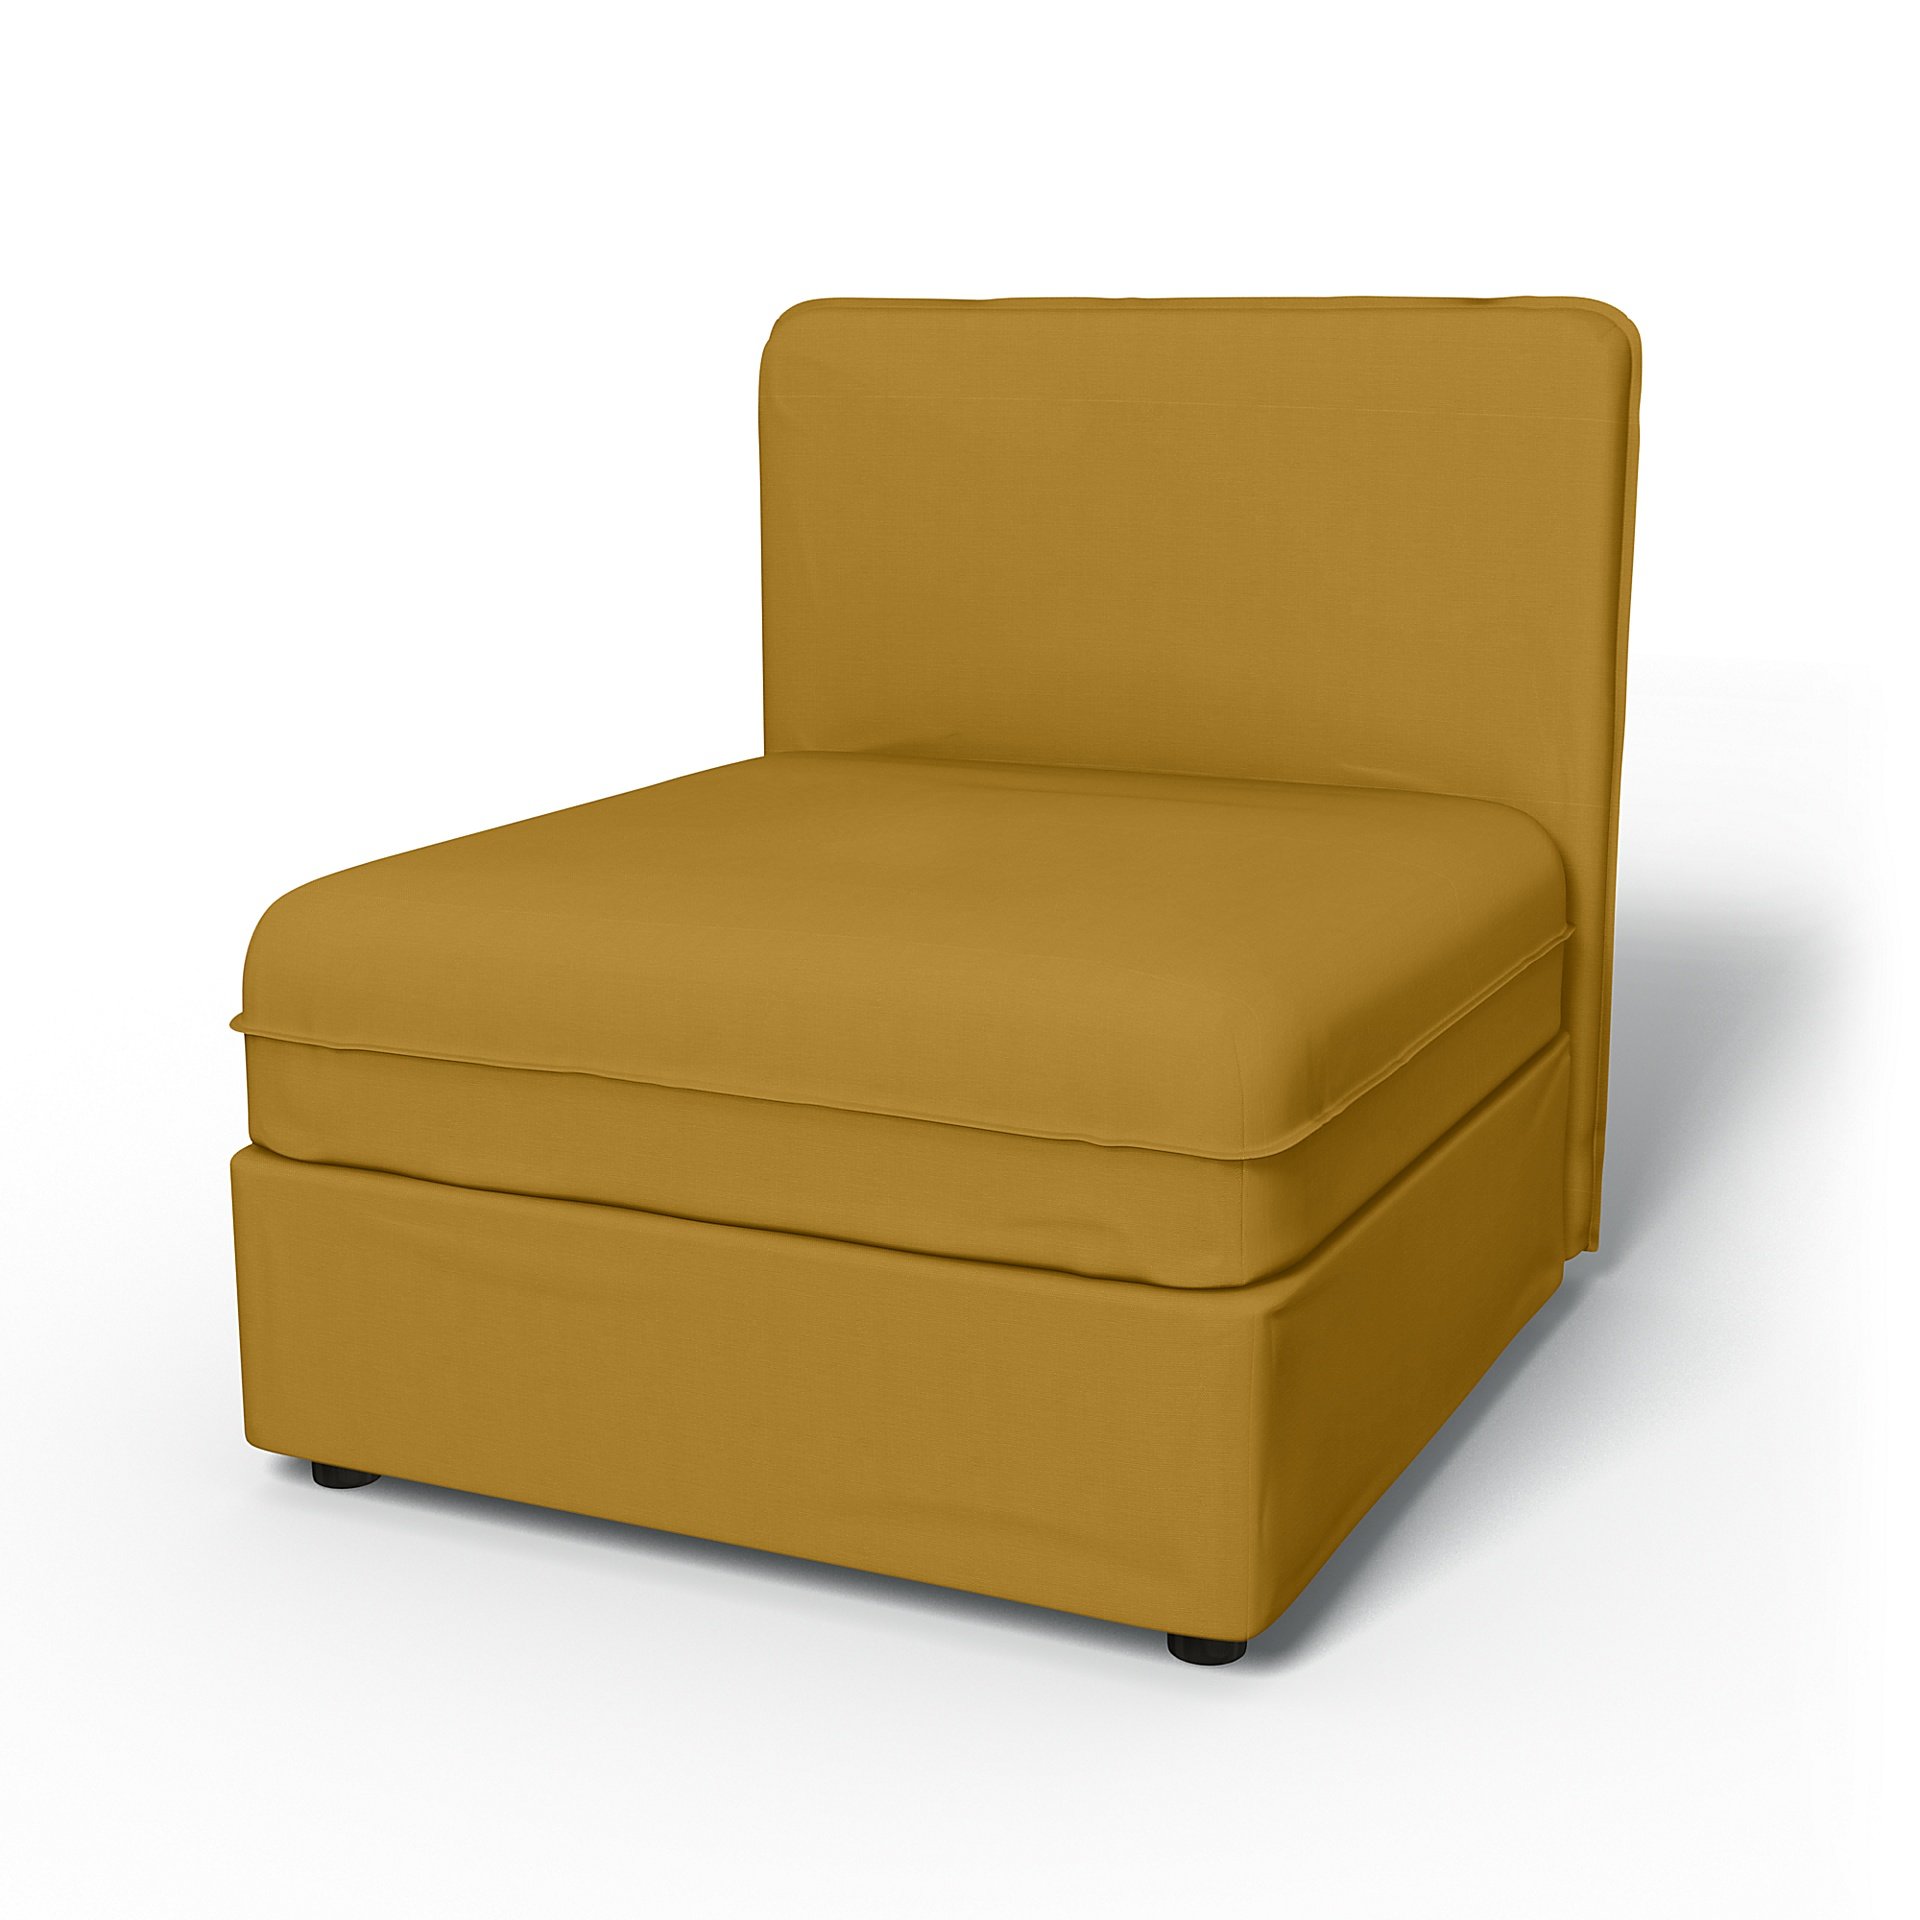 IKEA - Vallentuna Seat Module with Low Back Cover 80x80cm 32x32in, Honey Mustard, Cotton - Bemz